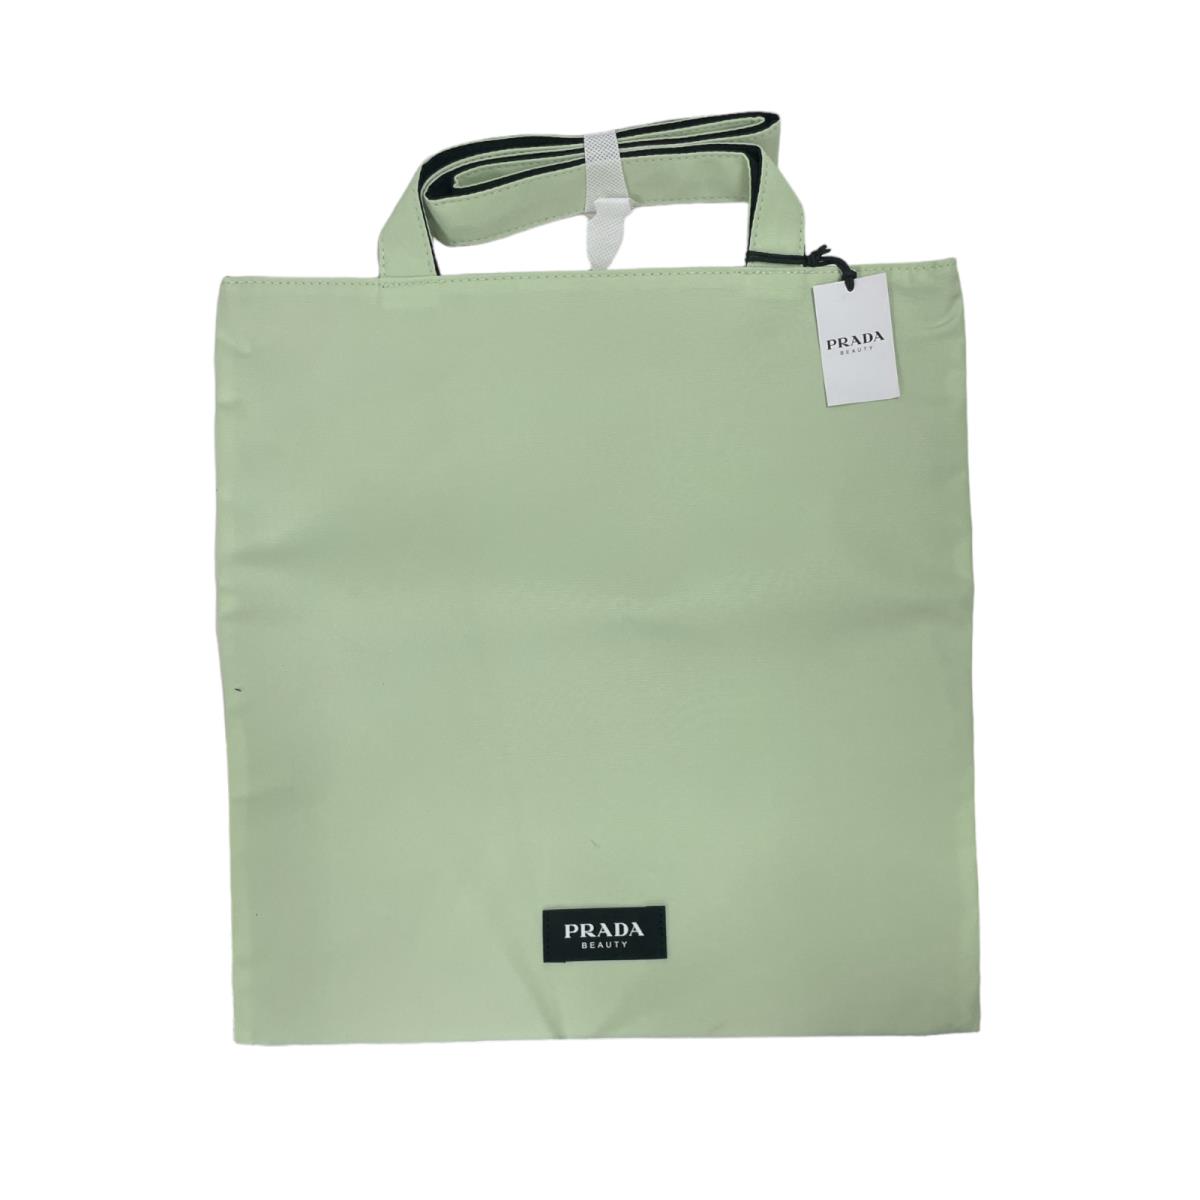 Prada Beauty Shoulder Tote Bag Light Green Recycled Material